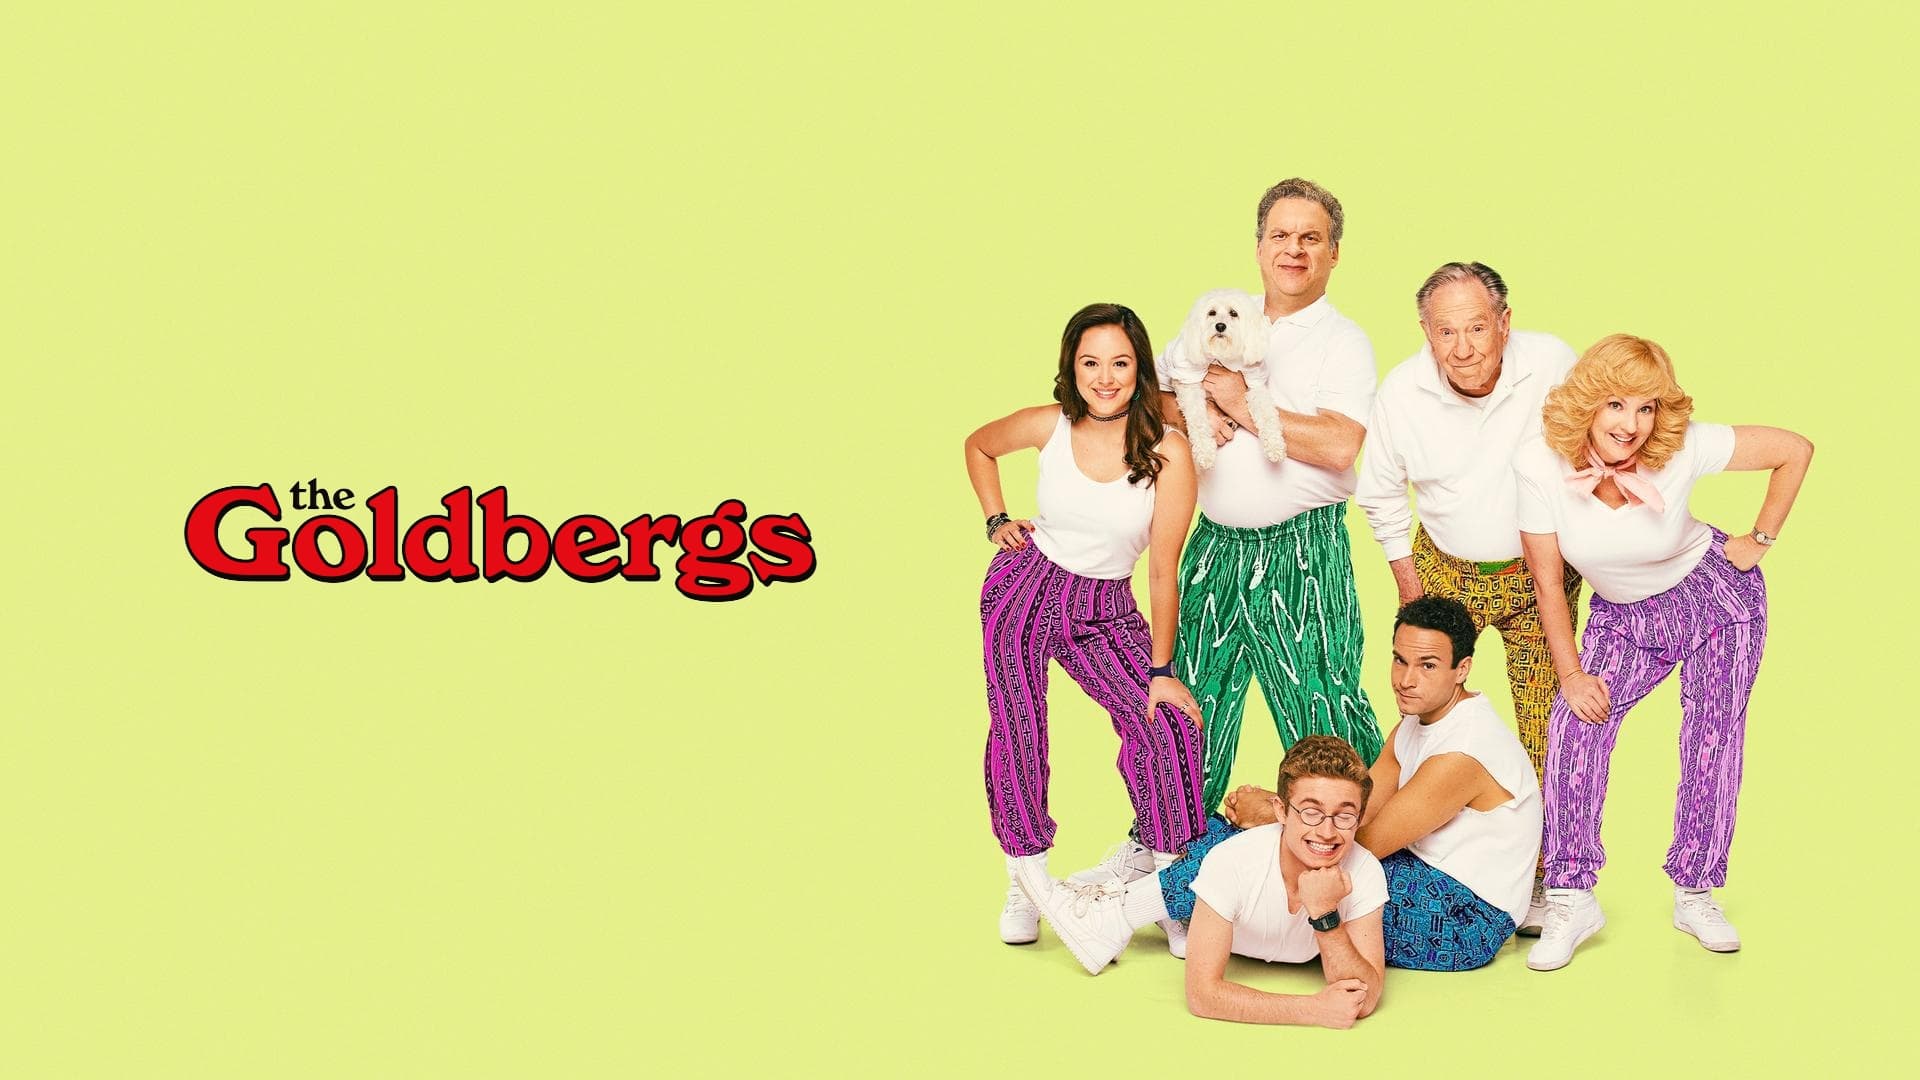 The Goldbergs - Season 6